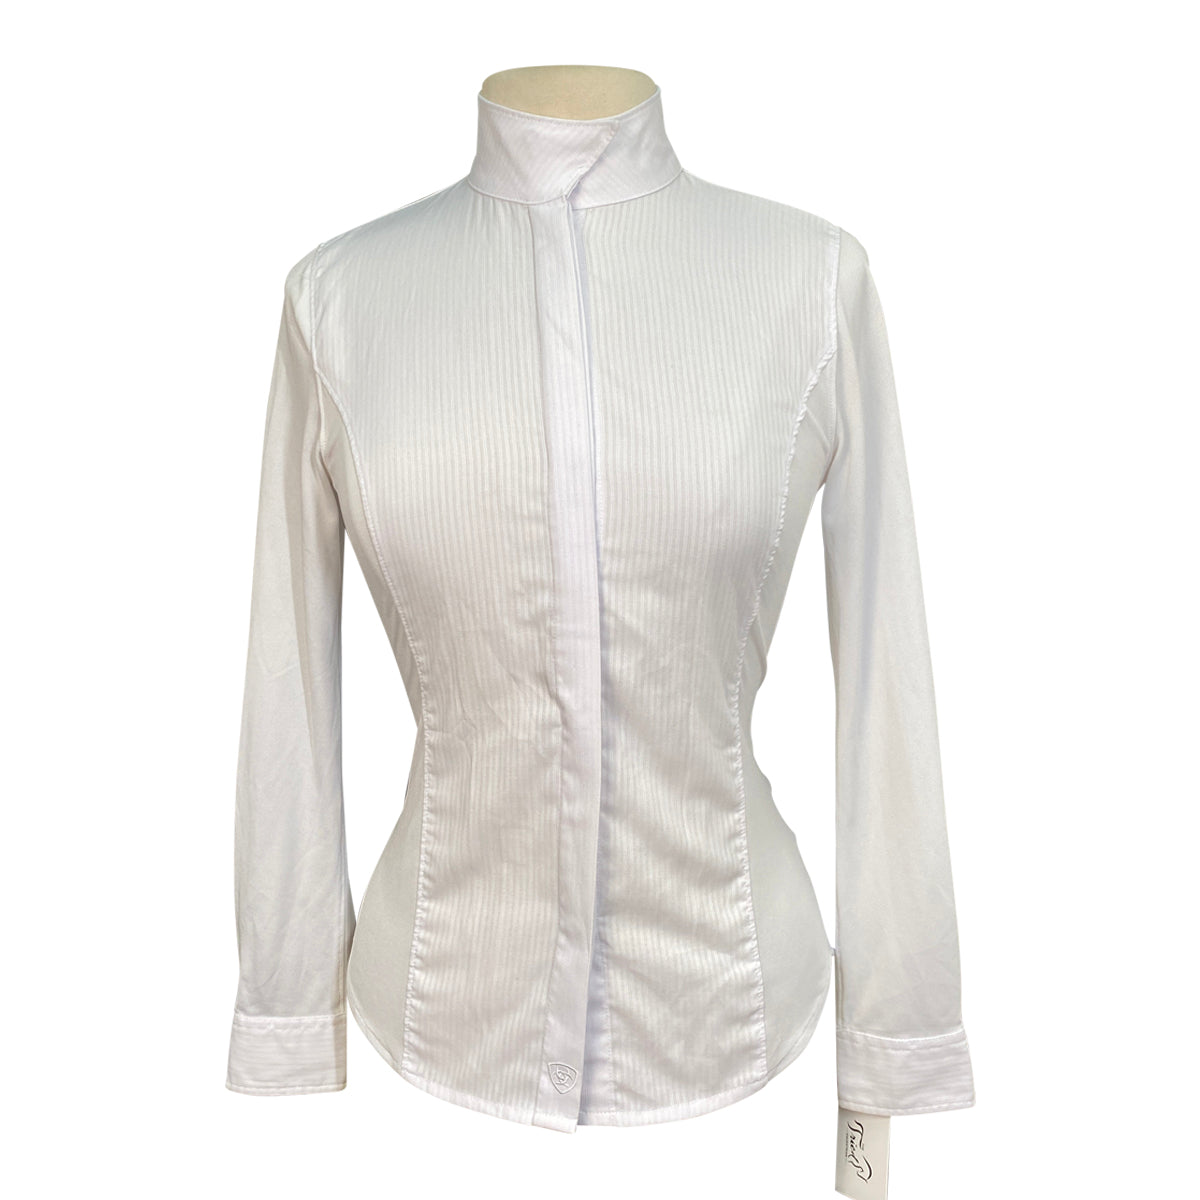 Ariat Long Sleeve Show Shirt in White Pinstripe